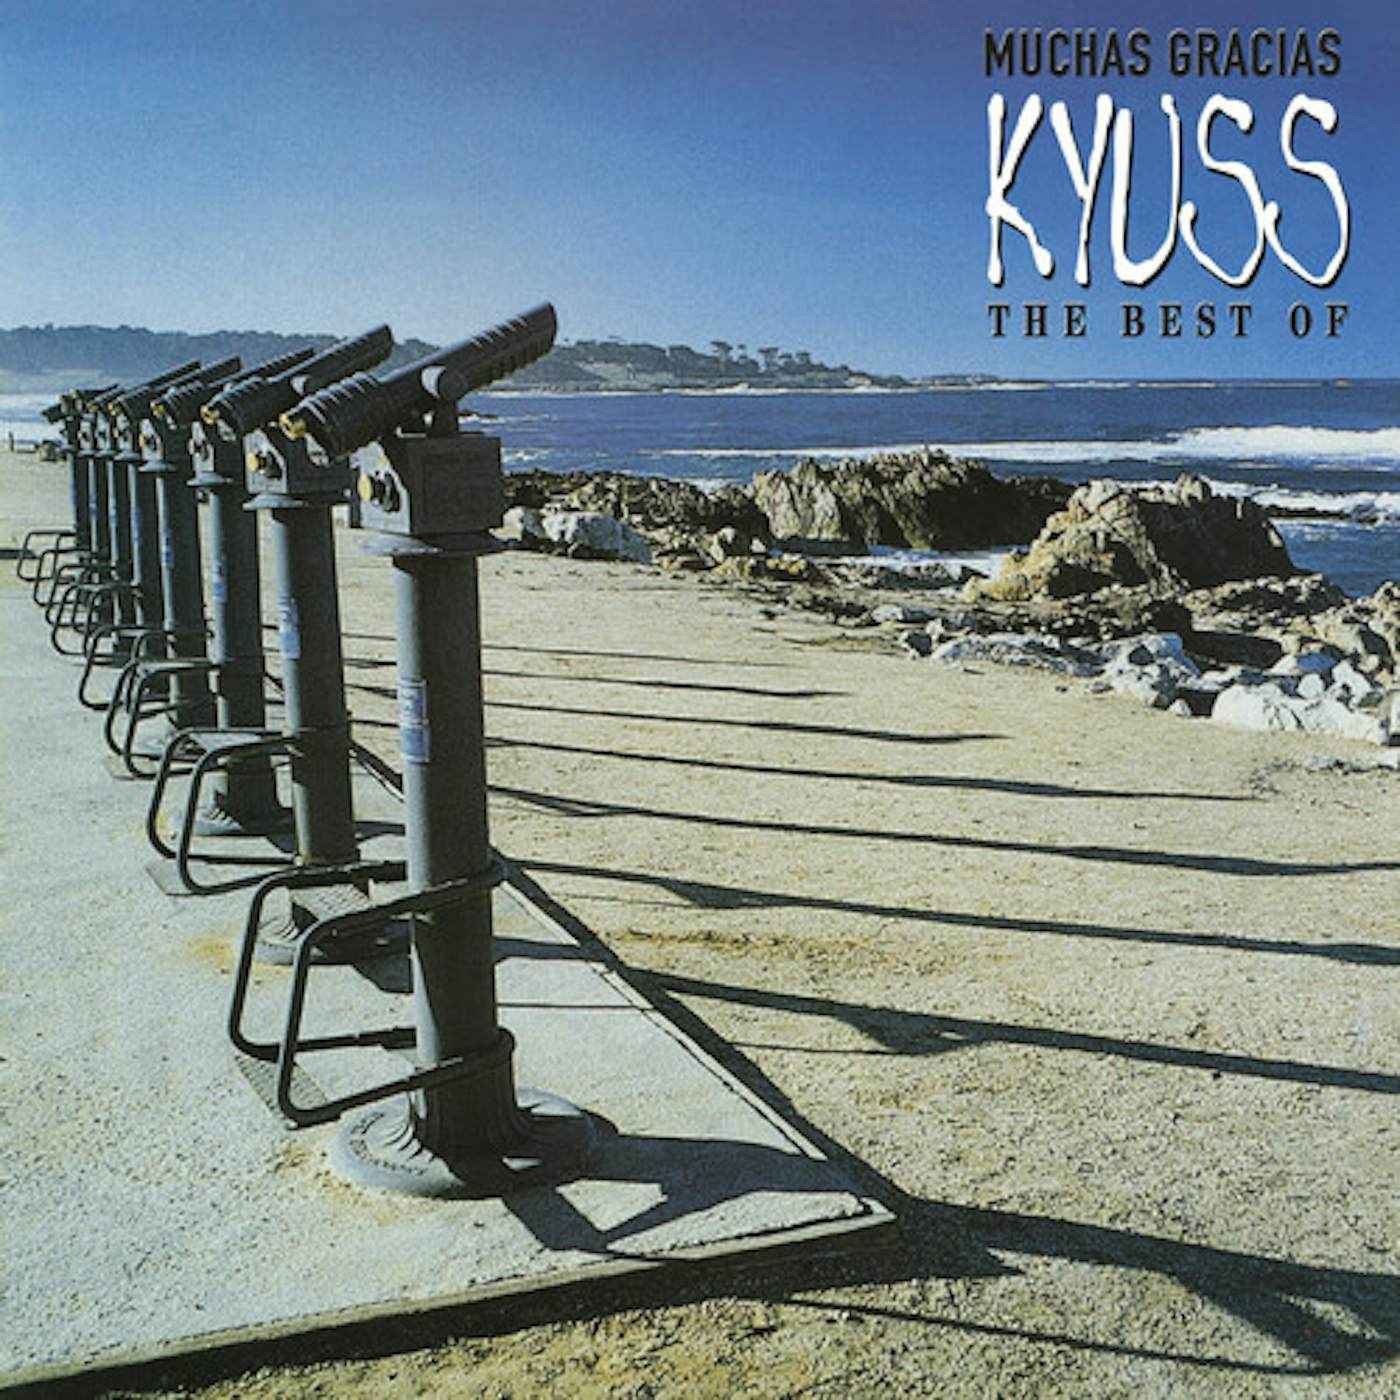 Muchas Gracias: The Best of Kyuss Vinyl Record